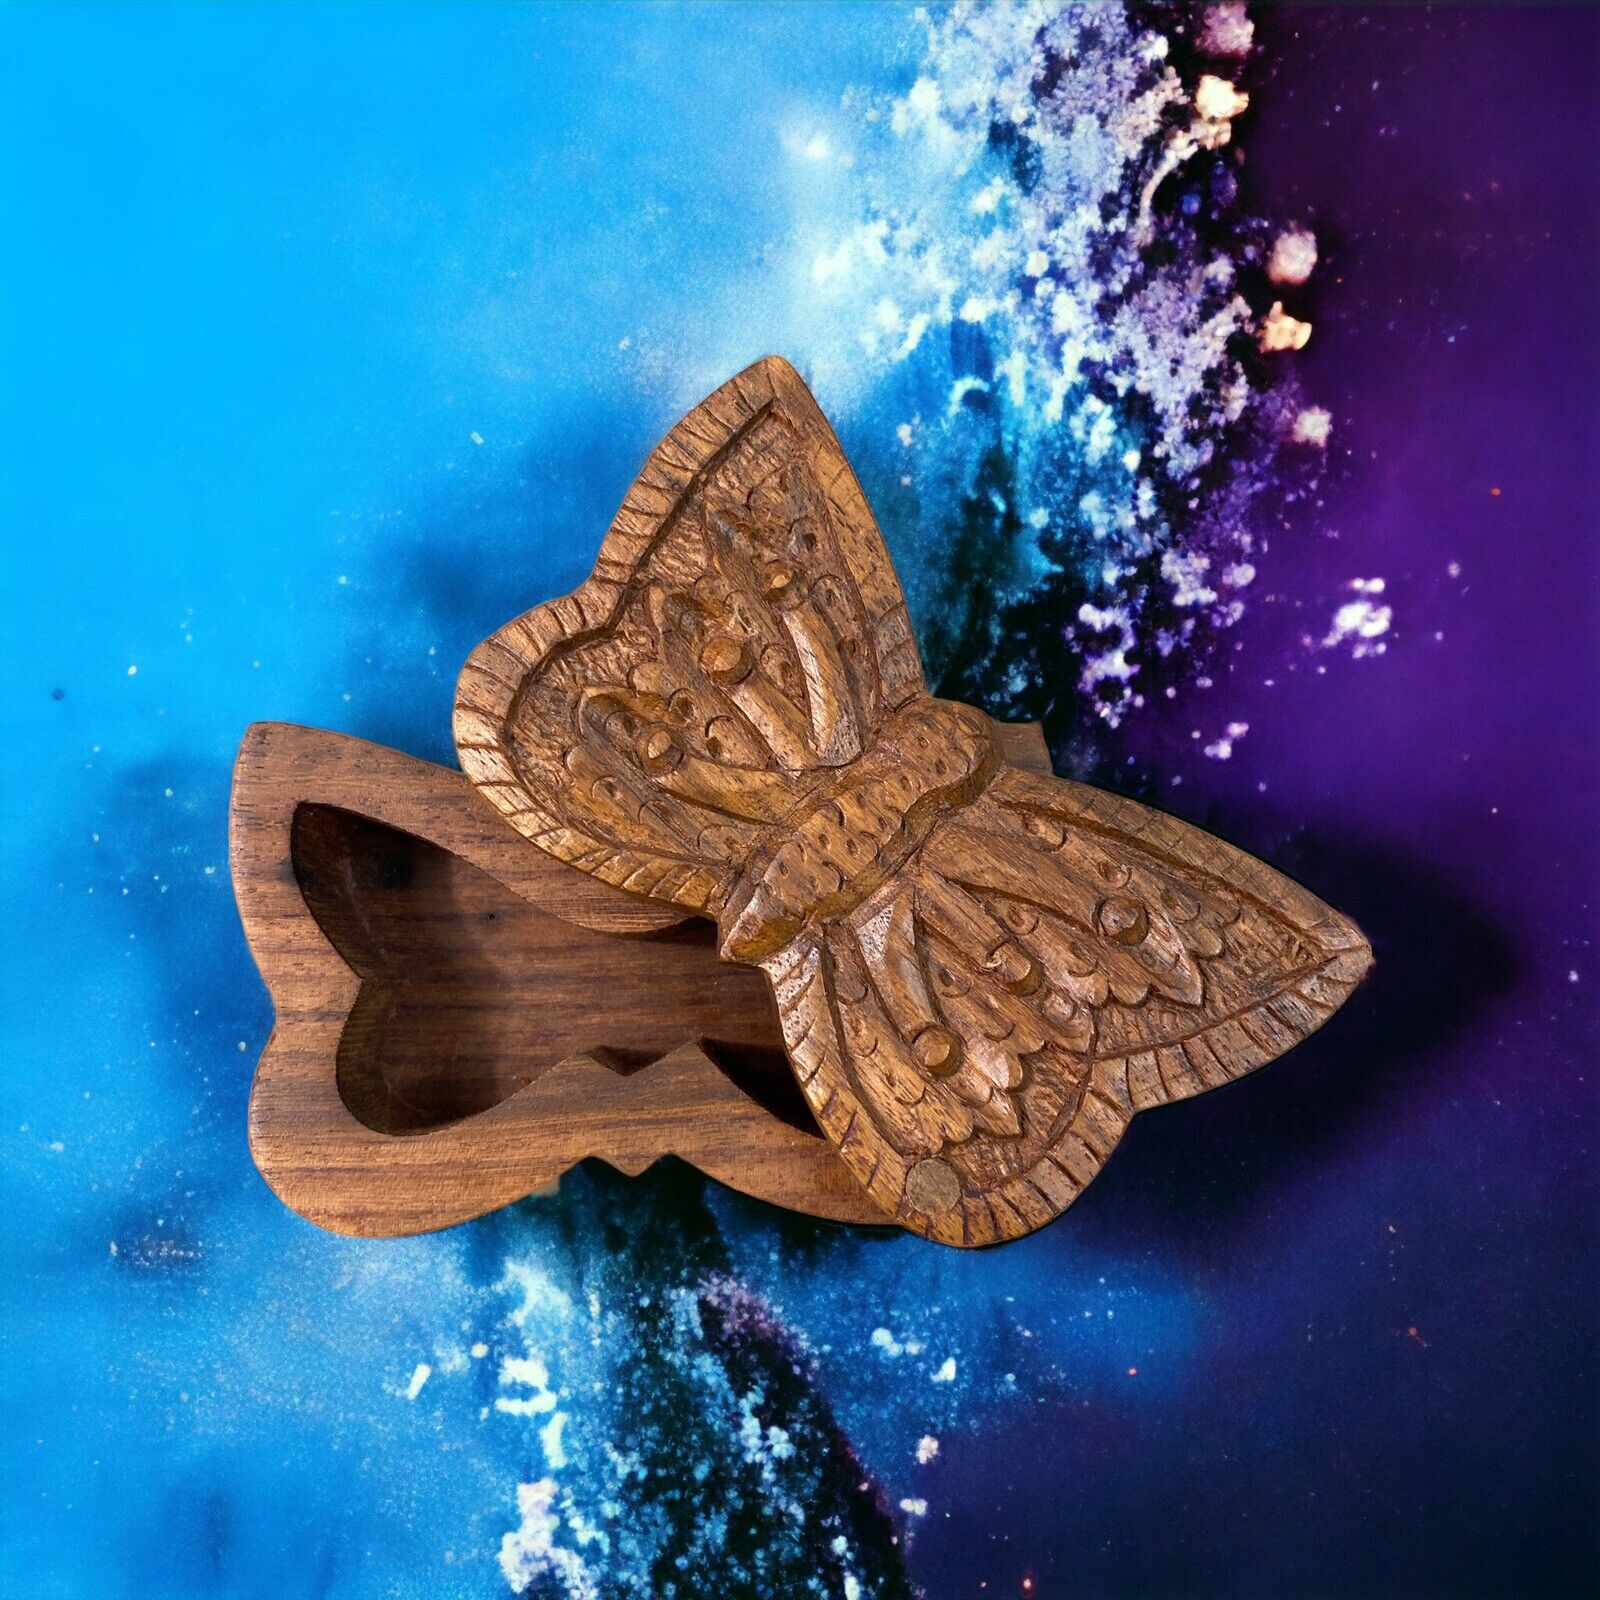 Ten Thousand Villages Carved Wooden Butterfly Trinket Box Slide Hinge Top